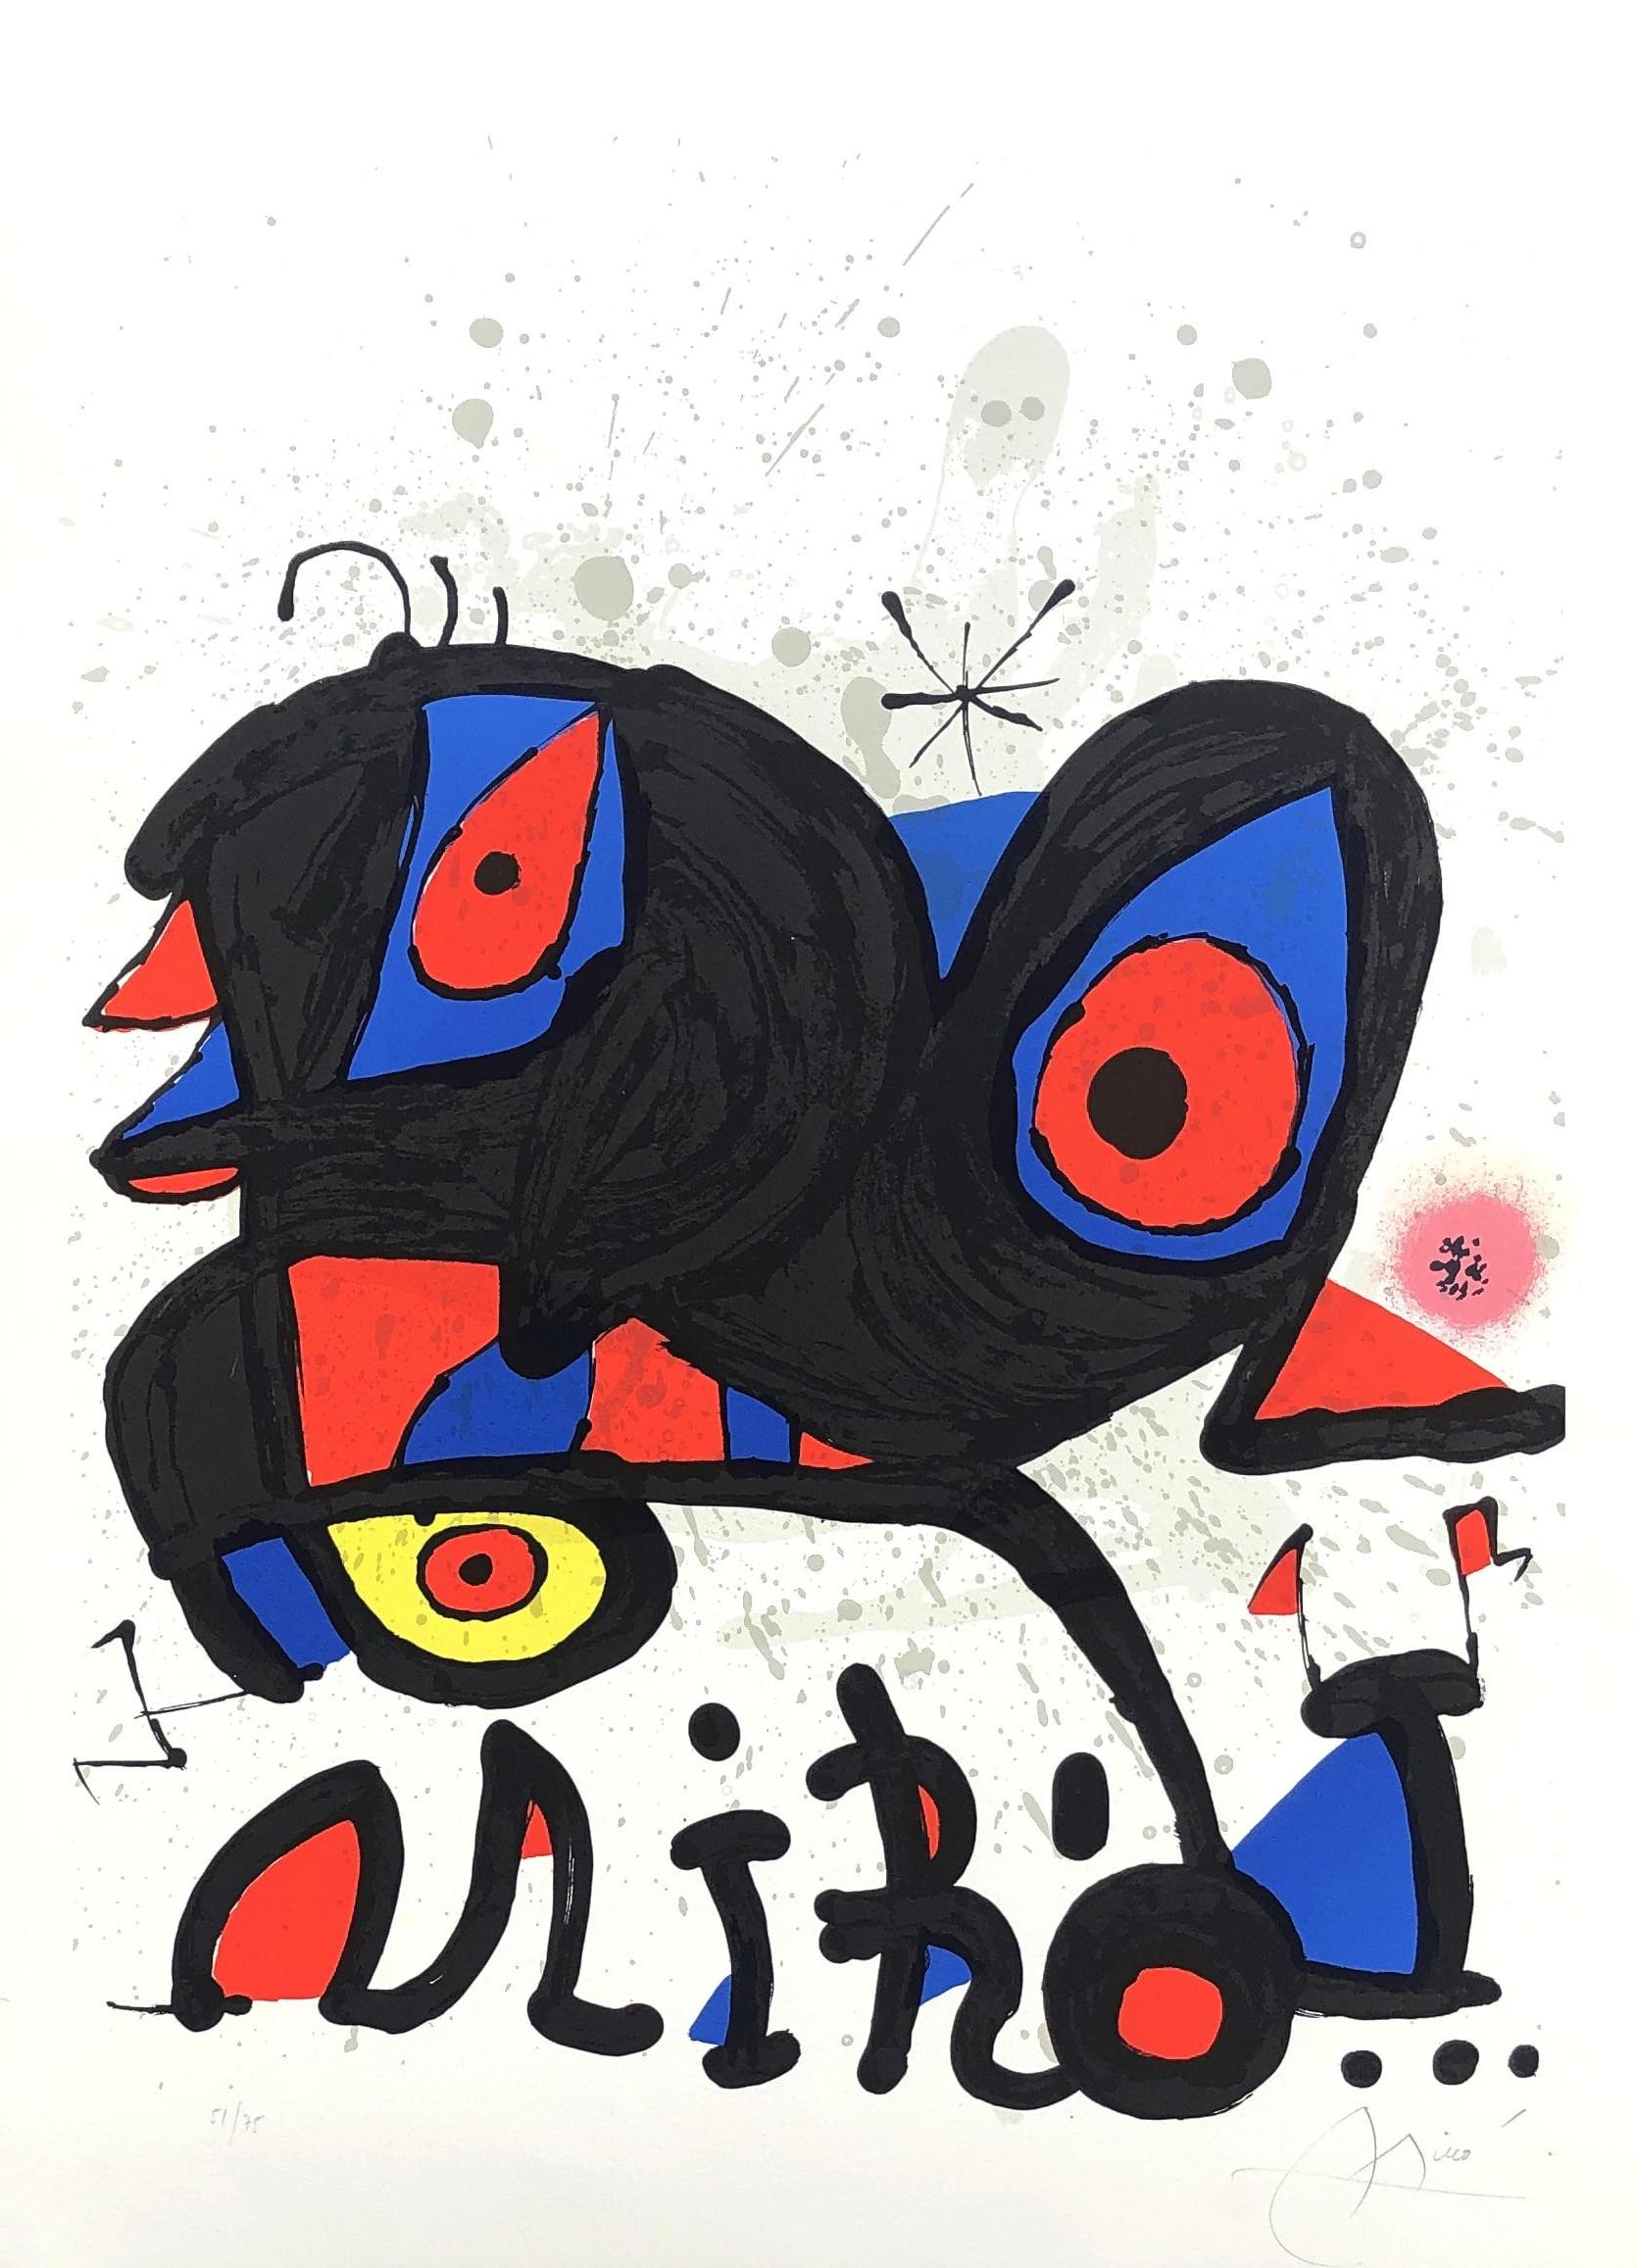 Joan Miró Abstract Print - Louisiana - Original Lithograph Handsigned - Abstract Composition